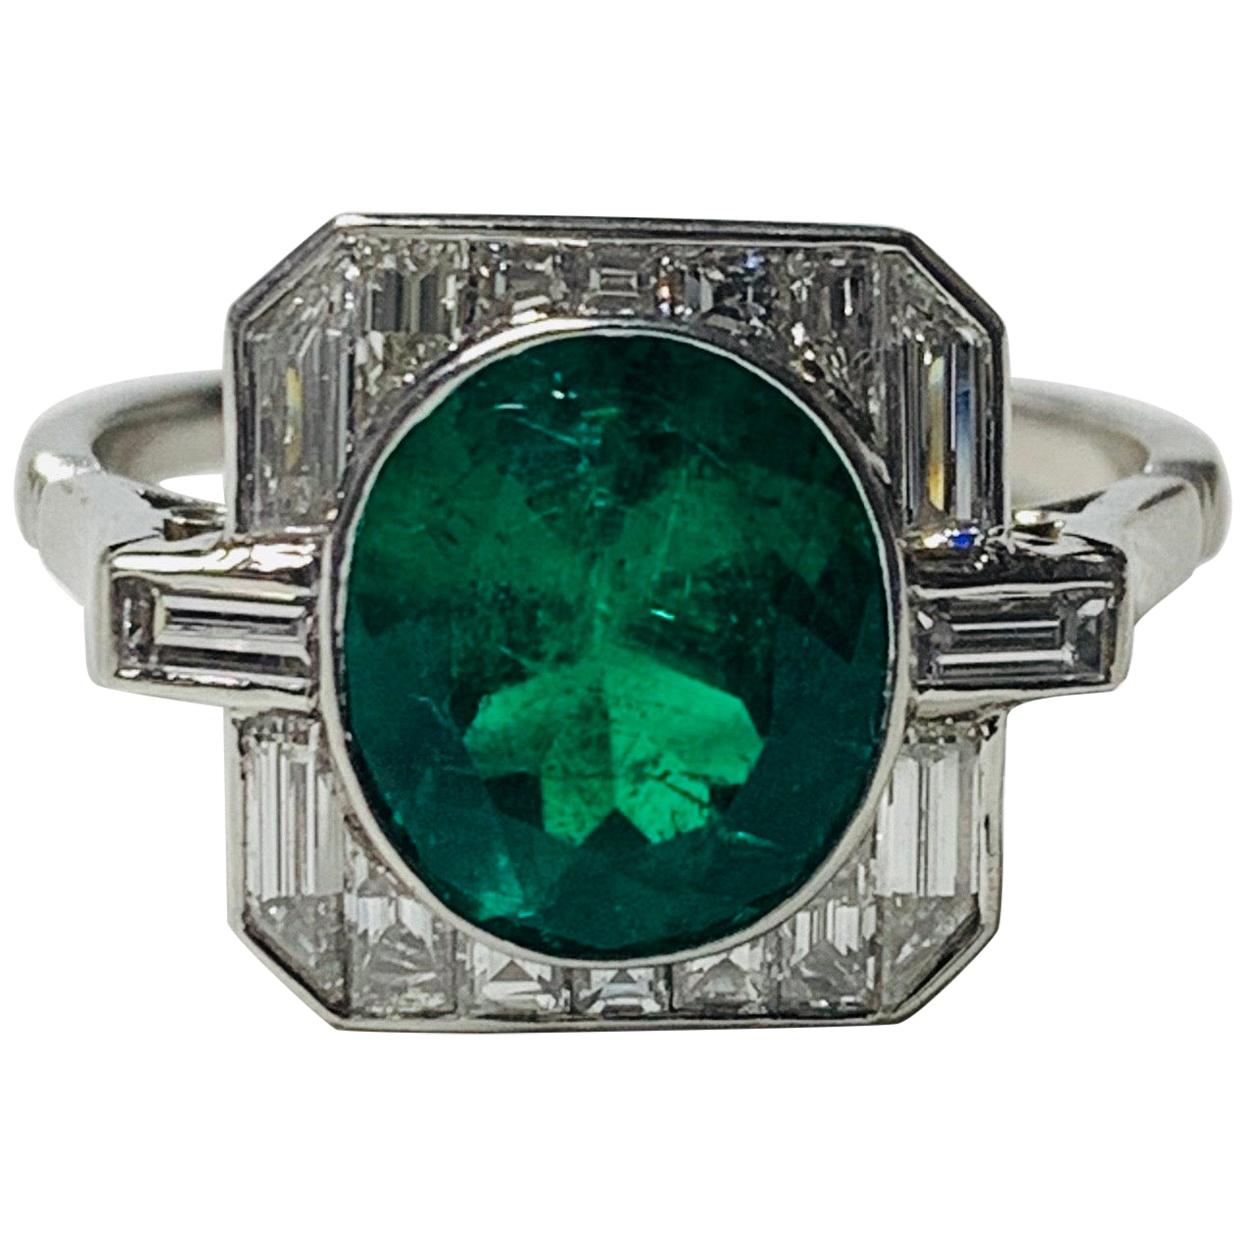 Emerald and Baguette Diamond Engagement Ring in Platinum